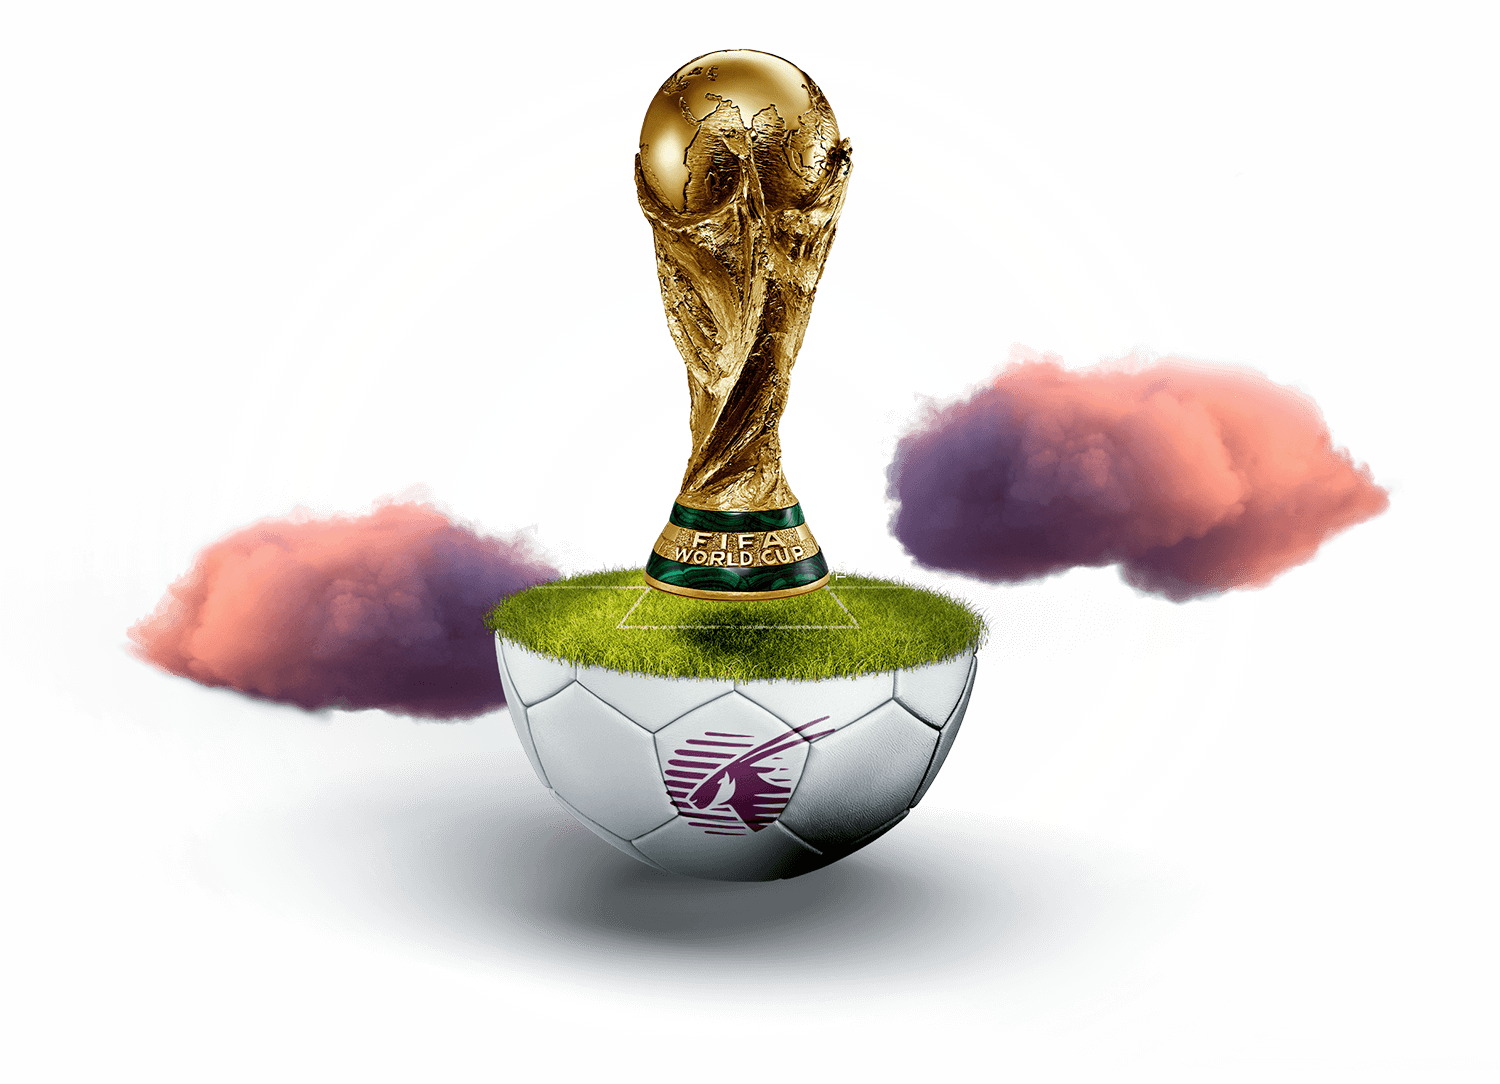 Fifa World Cup qatar 2022 flag Tunisia 13994221 PNG